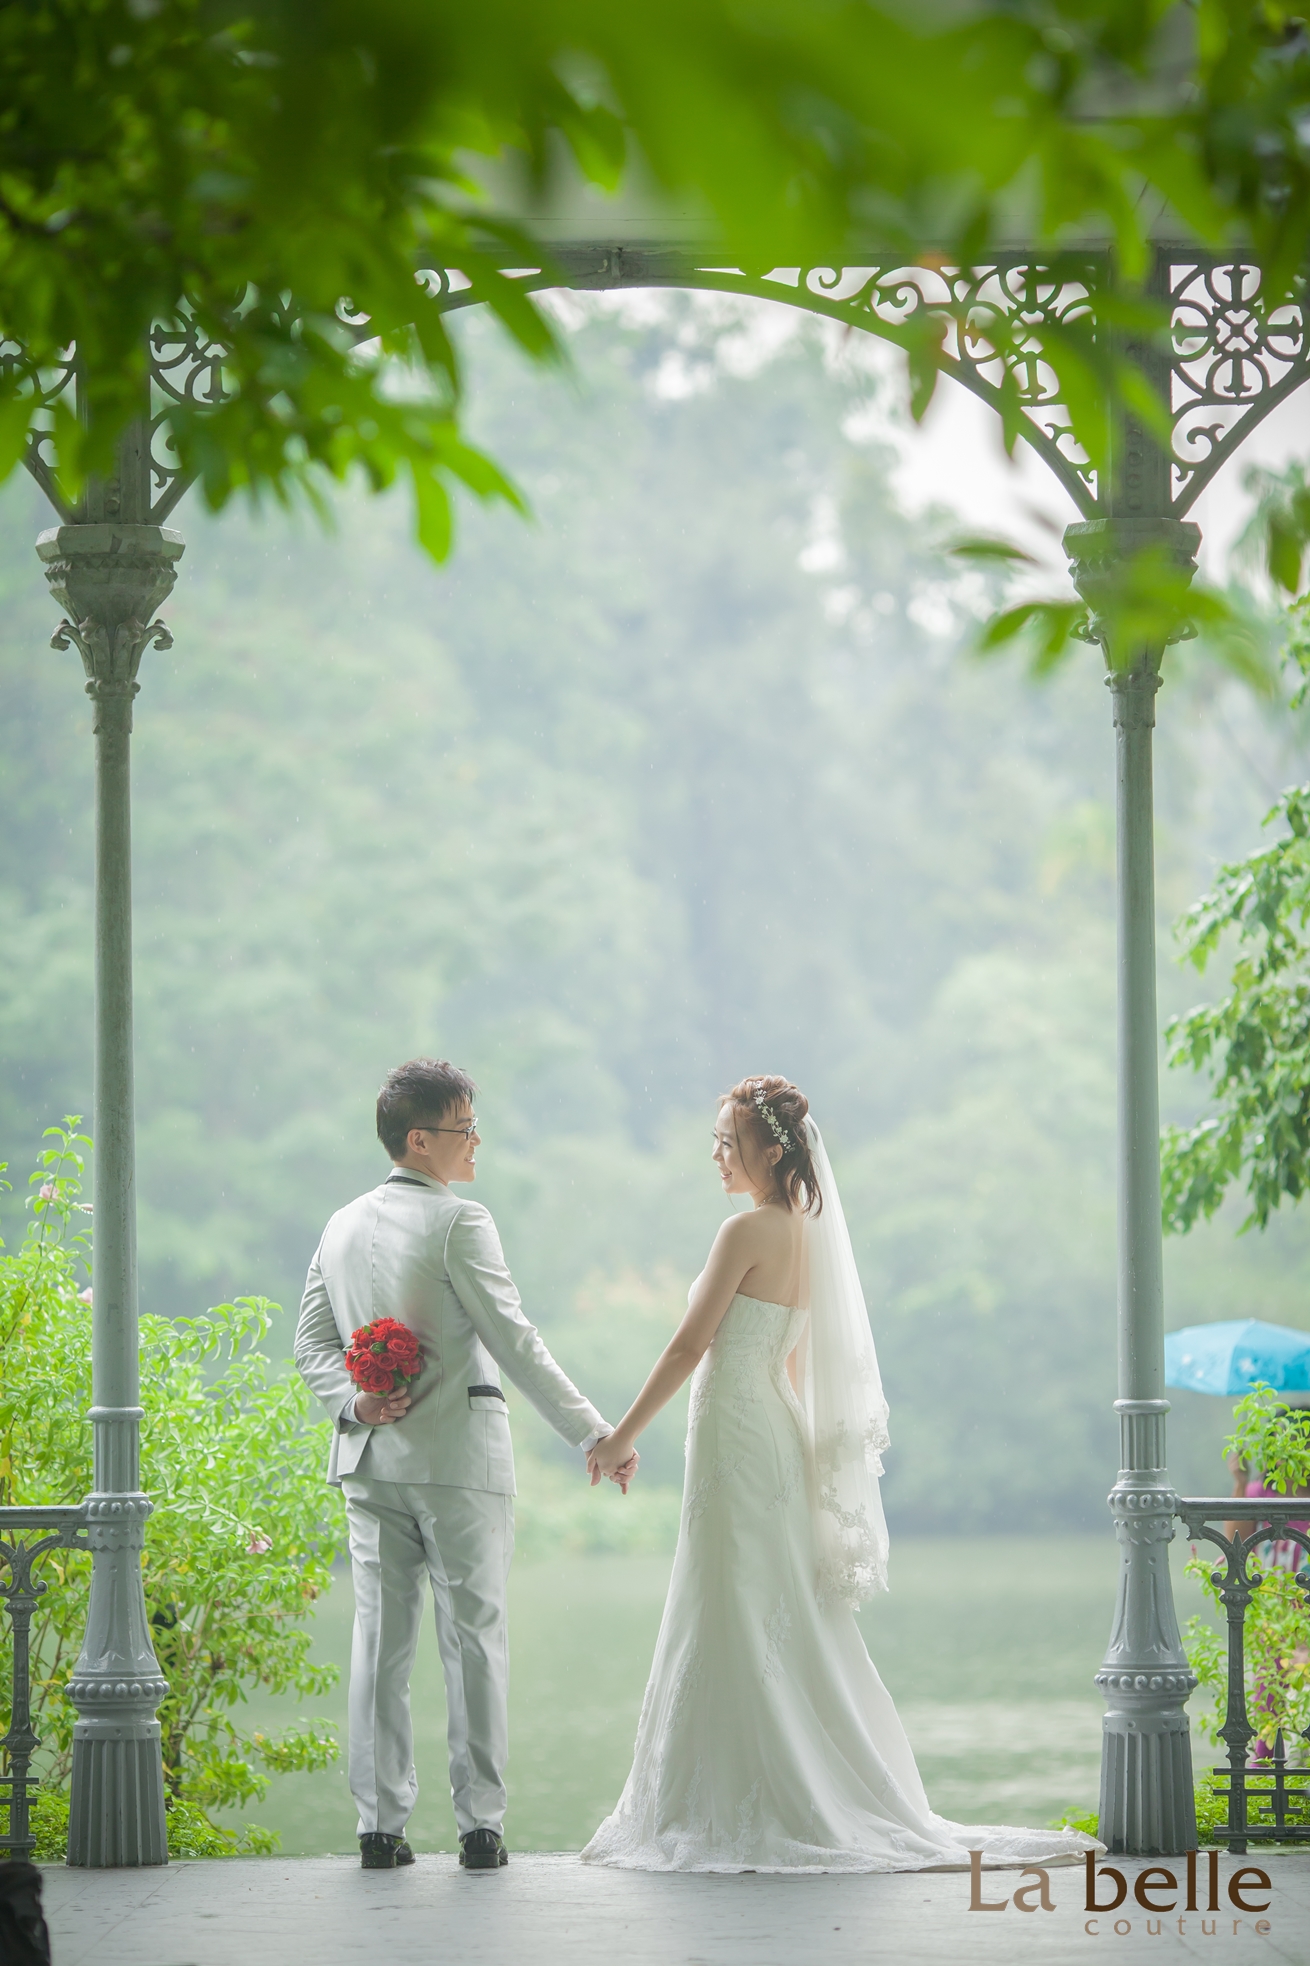 50 Wedding Photo Ideas From Real Weddings – ShootDotEdit